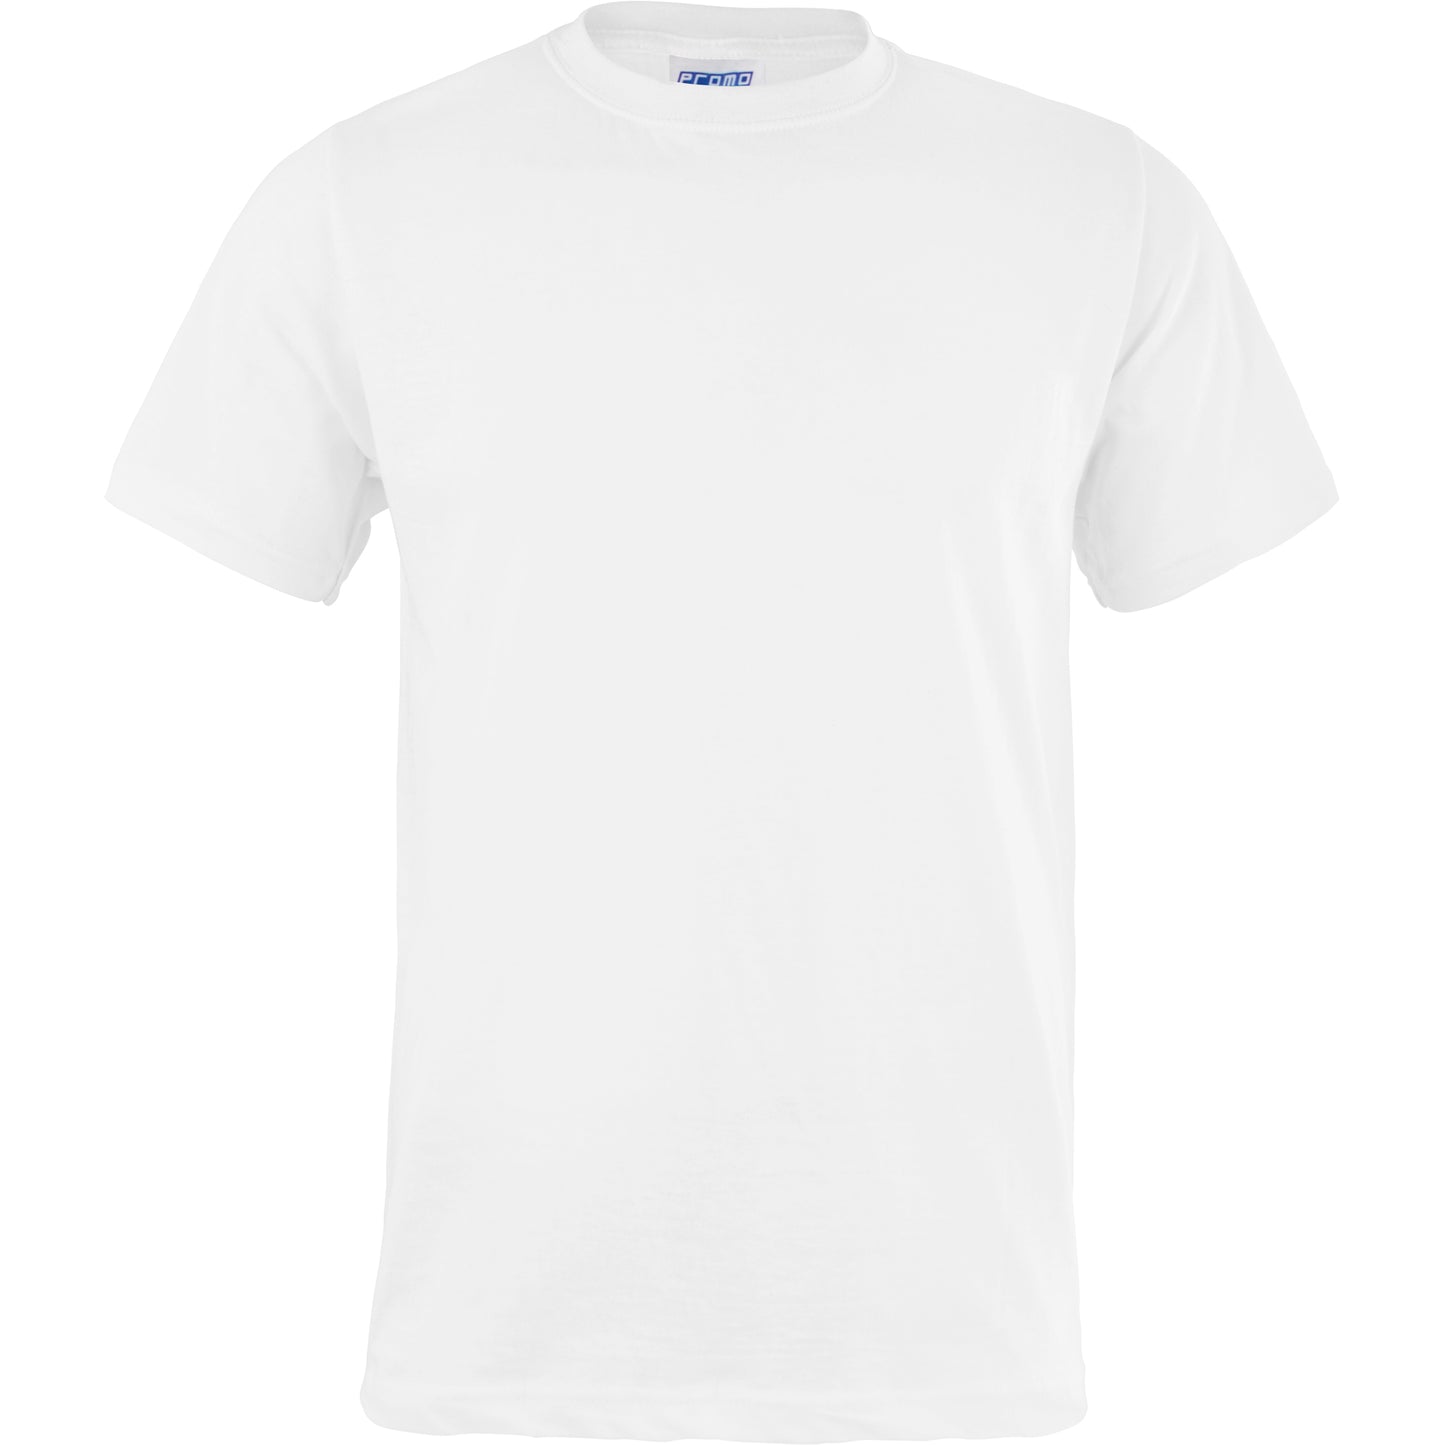 Unisex Promo T-Shirt -White Only